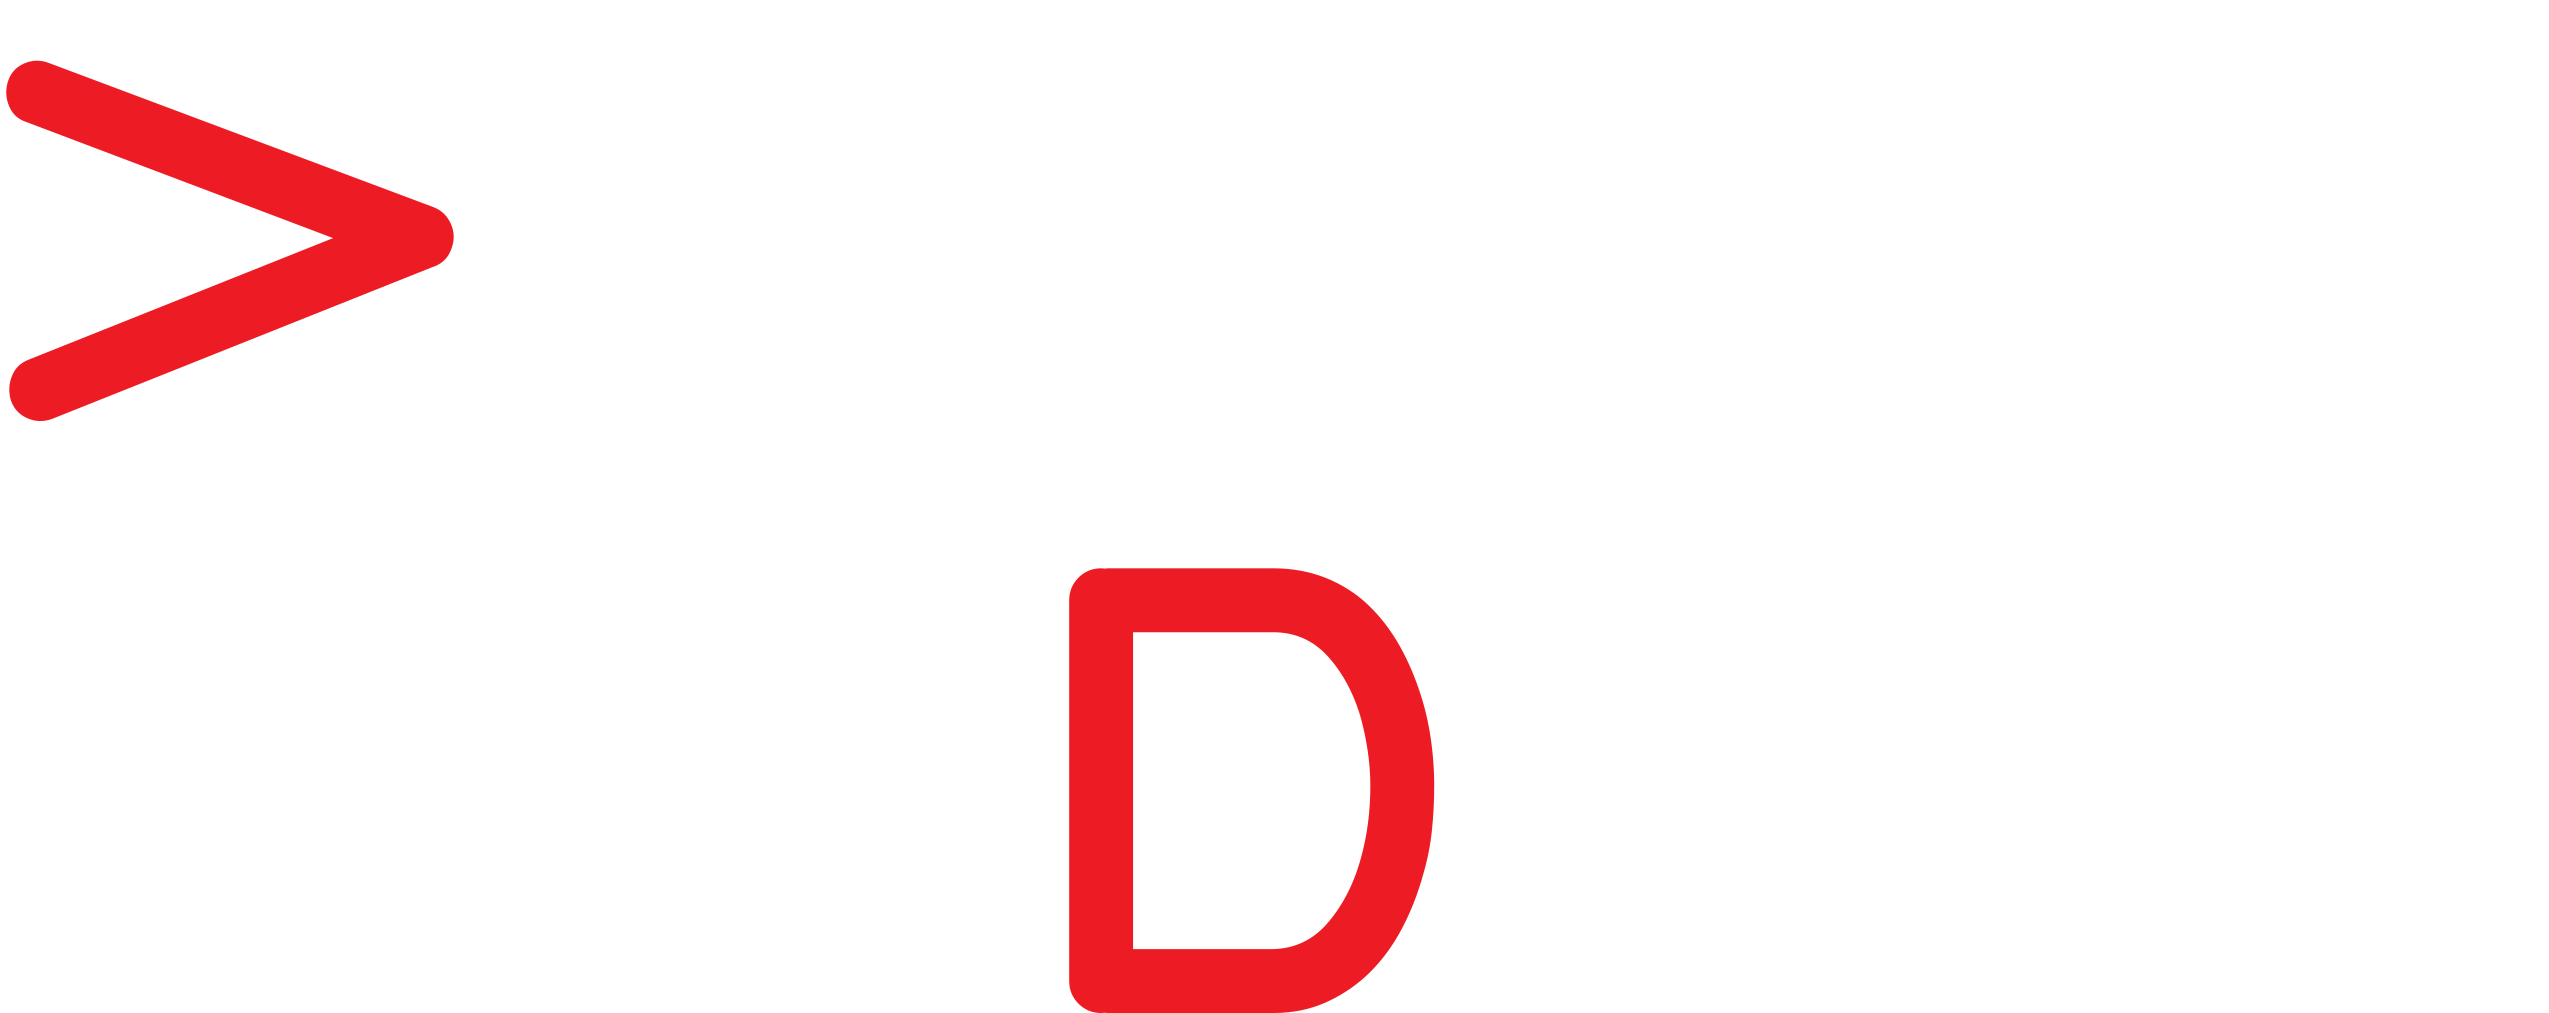 opinion leader logo